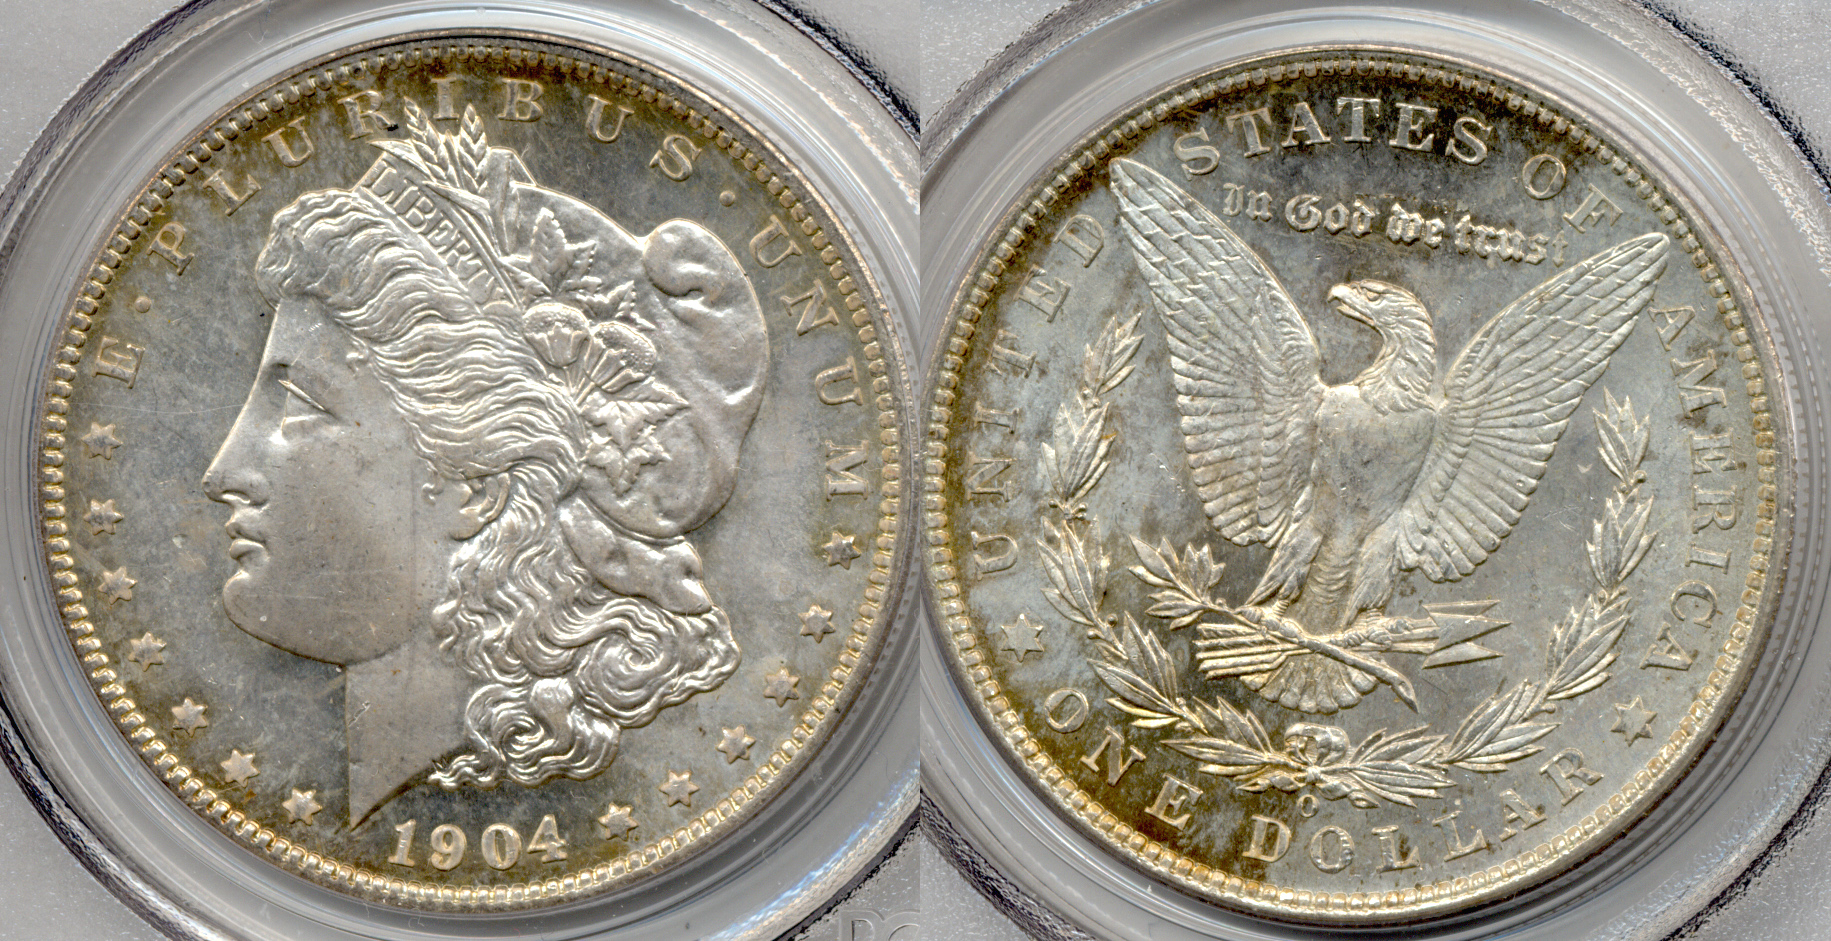 1904-O Morgan Silver Dollar in PCGS MS-64